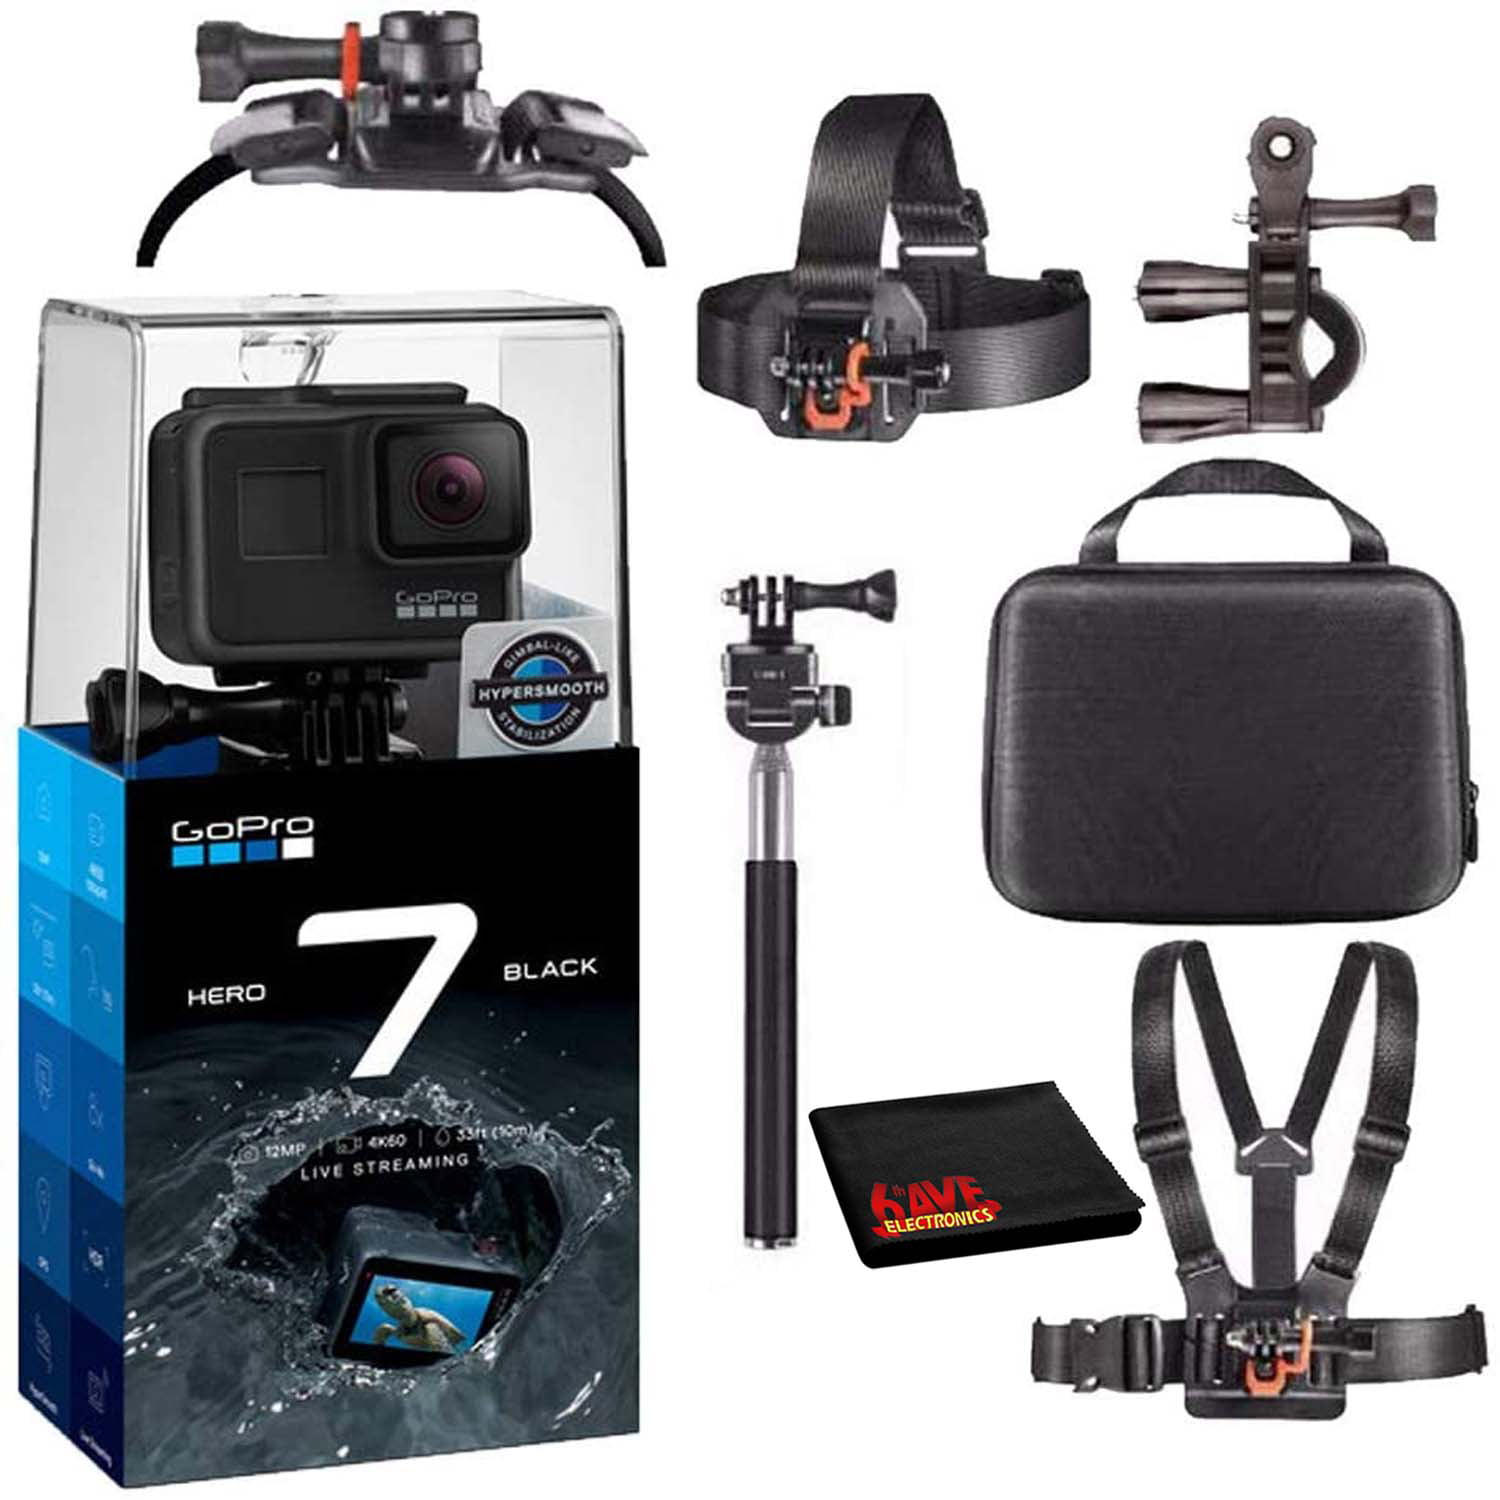 GoPro HERO7 Black Waterproof Digital Action Camera Bundle + Action